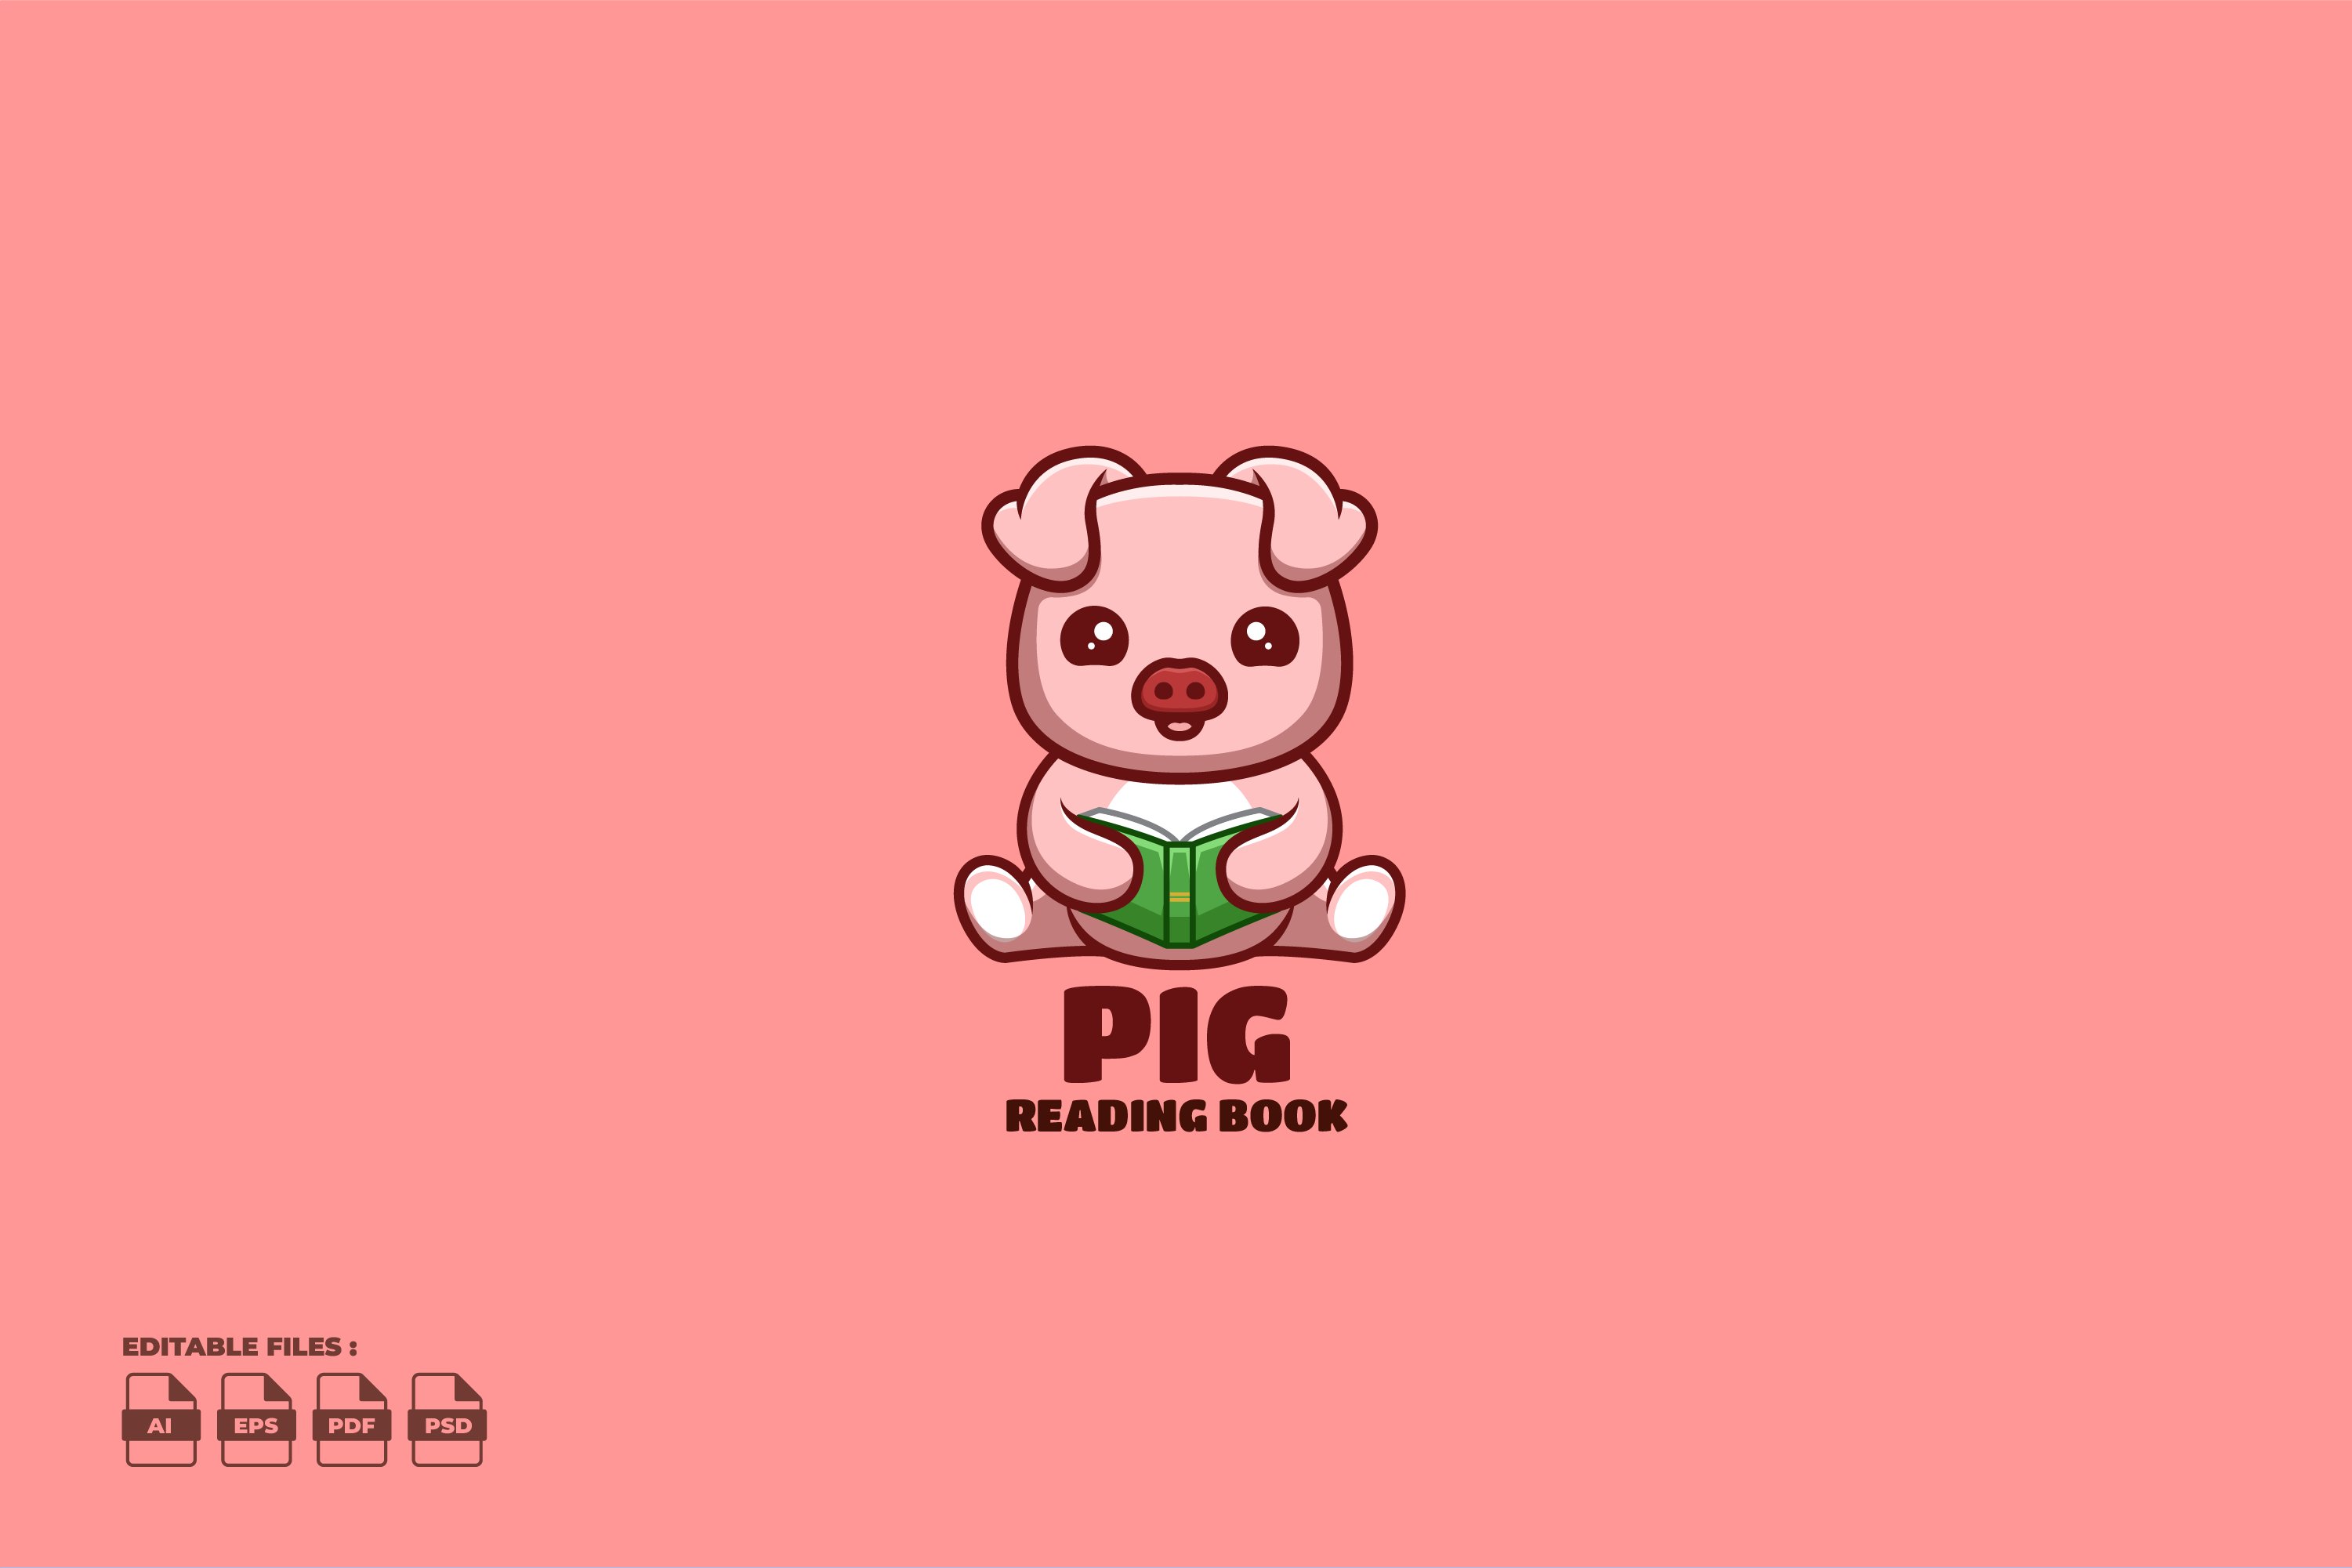 Reading Book Pig Cute Mascot Logo cover image.